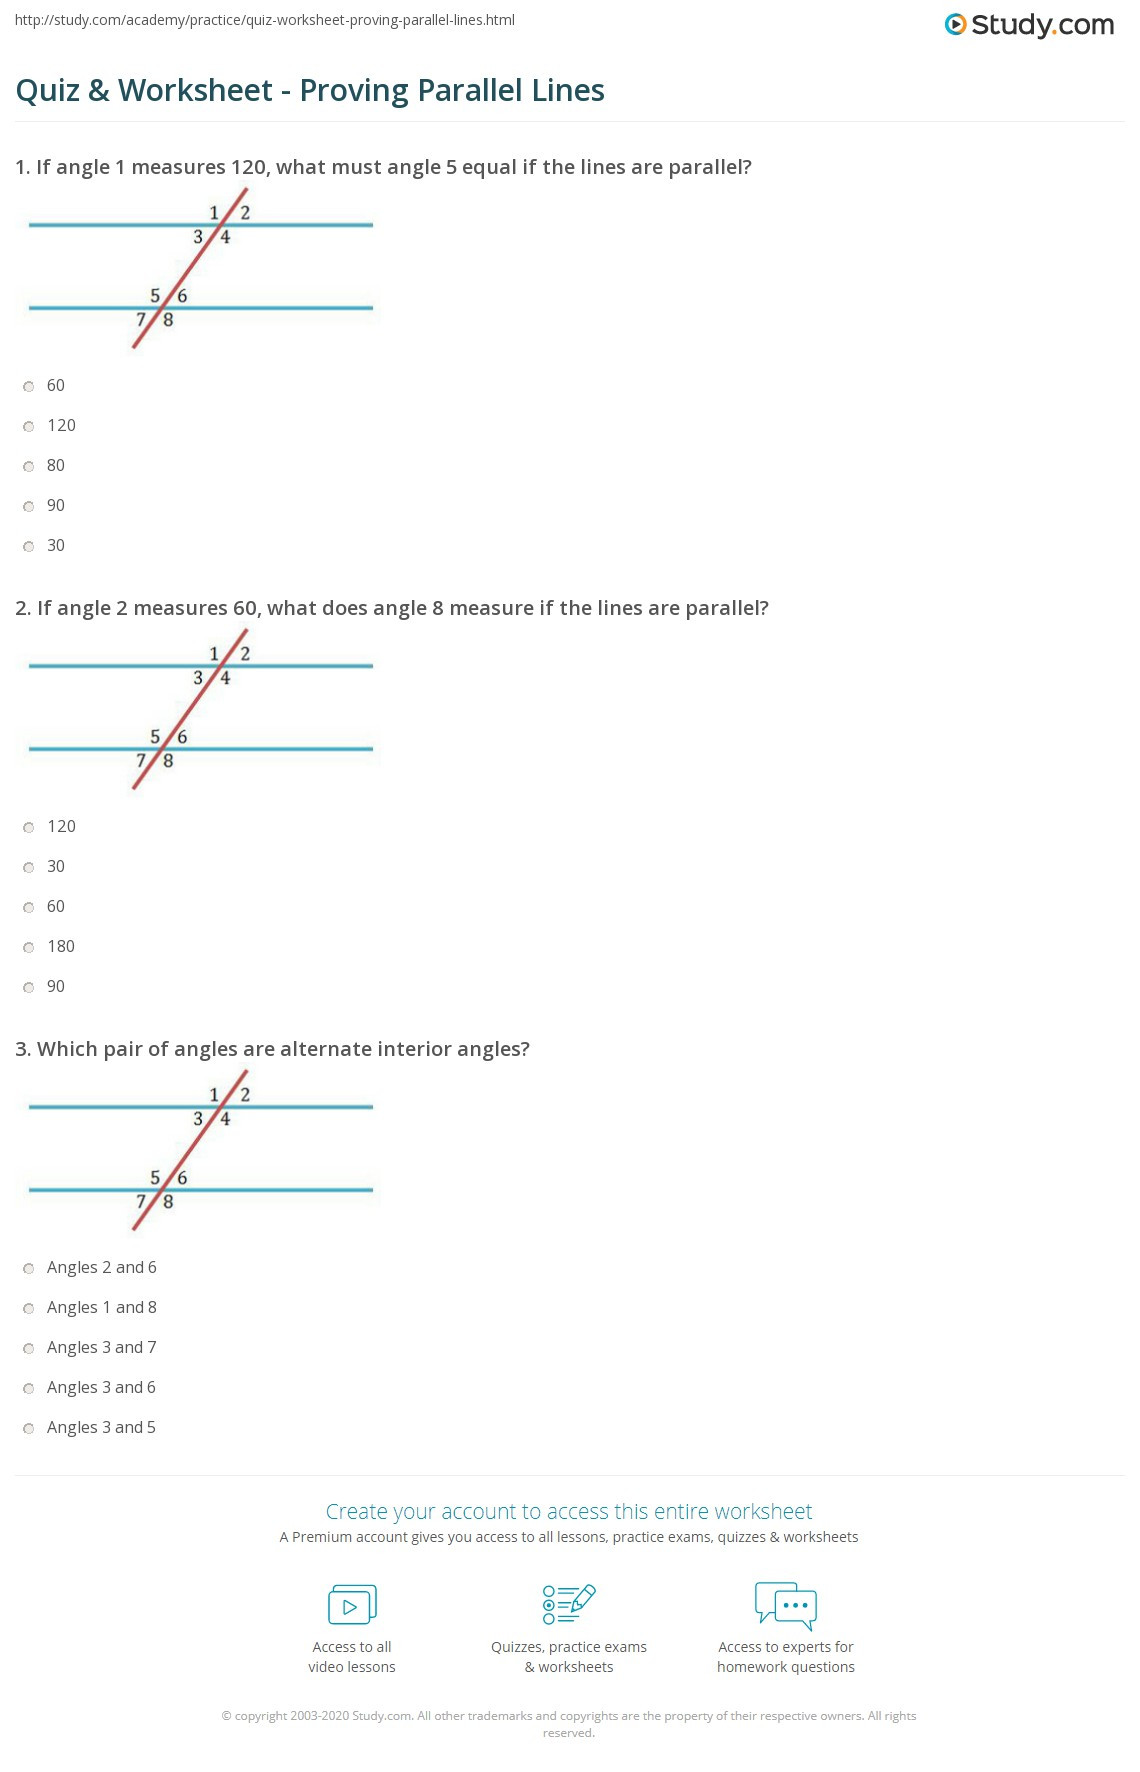 Proving Lines Parallel Worksheet Quiz &amp; Worksheet Proving Parallel Lines